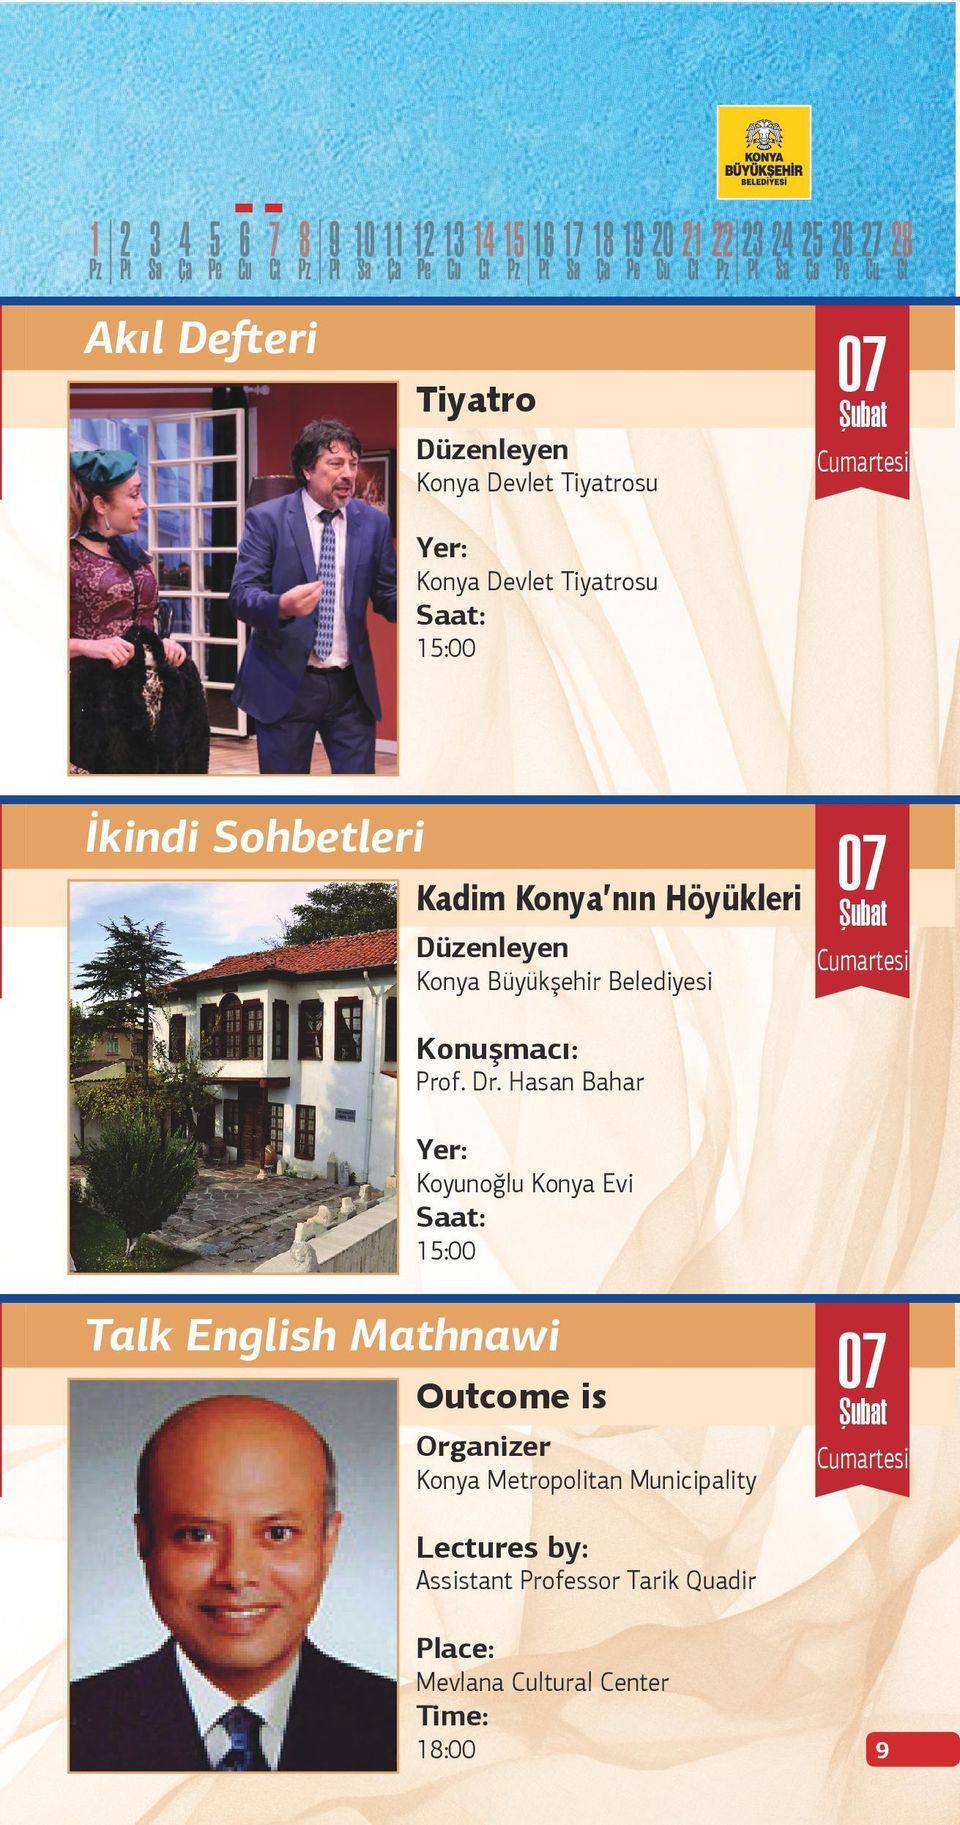 Hasan Bahar Koyunoğlu Konya Evi 15:00 Talk English Mathnawi Outcome is Organizer